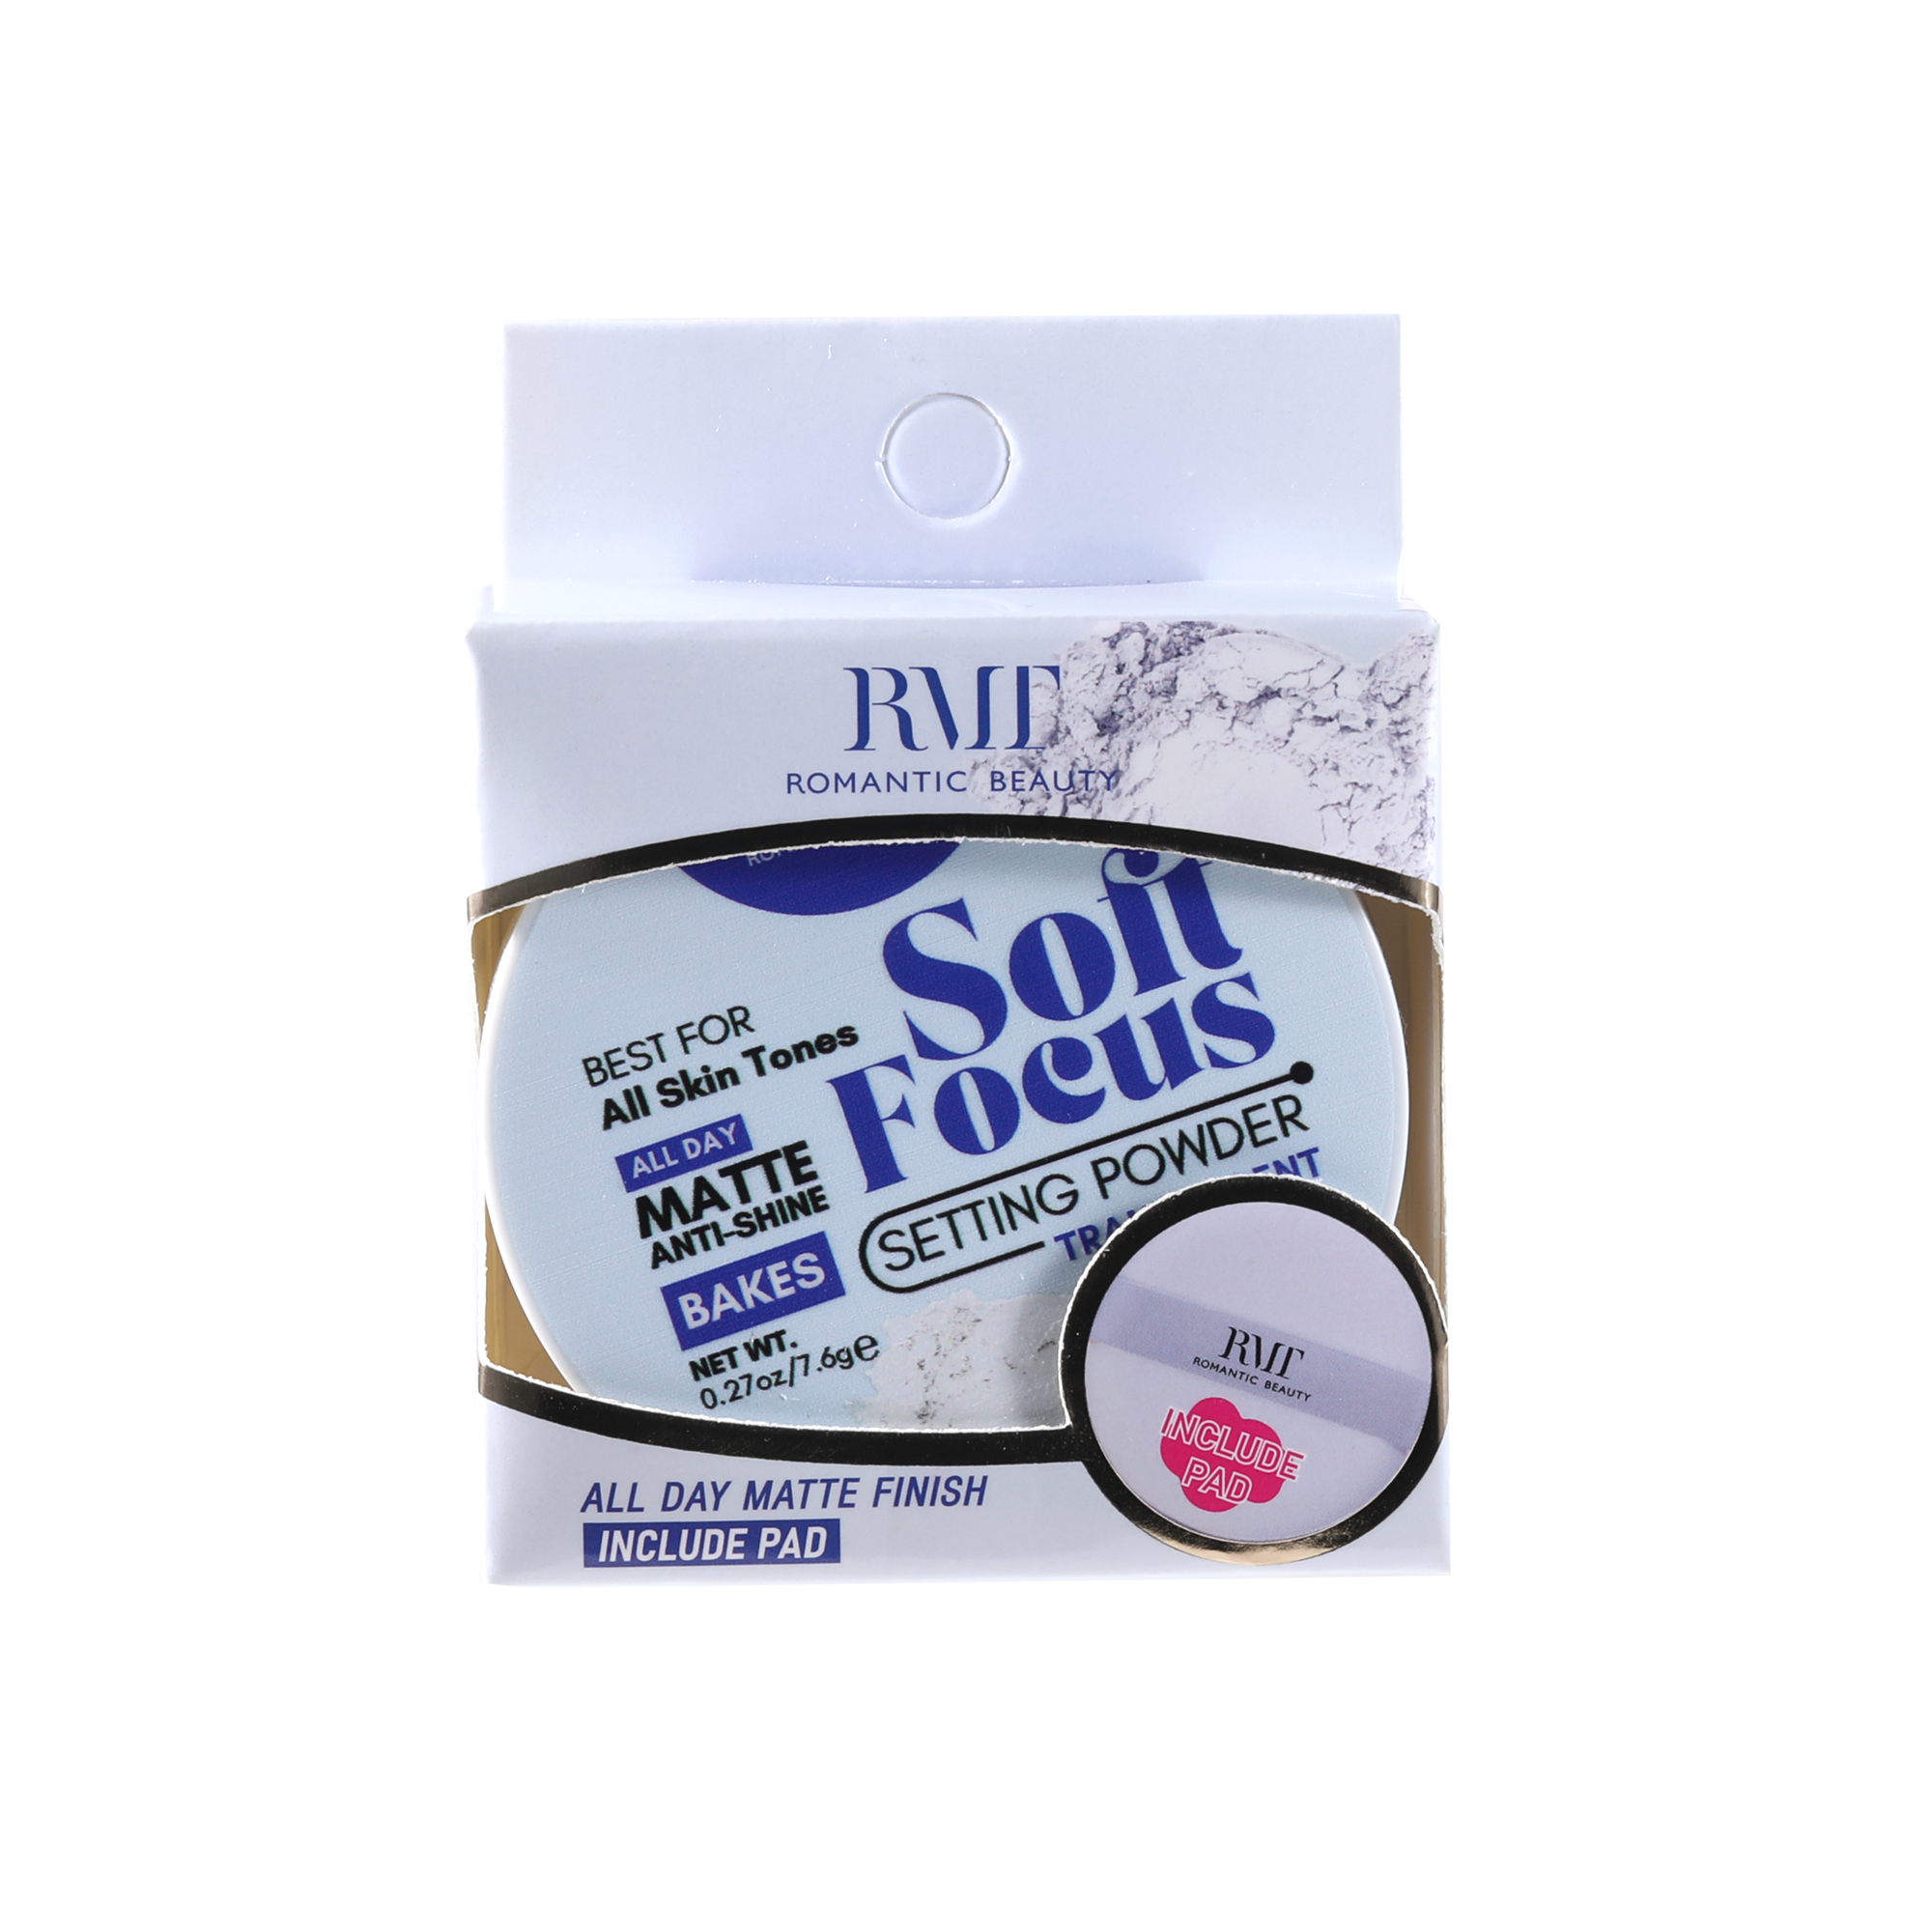 Soft Focus Translucent Setting Powder